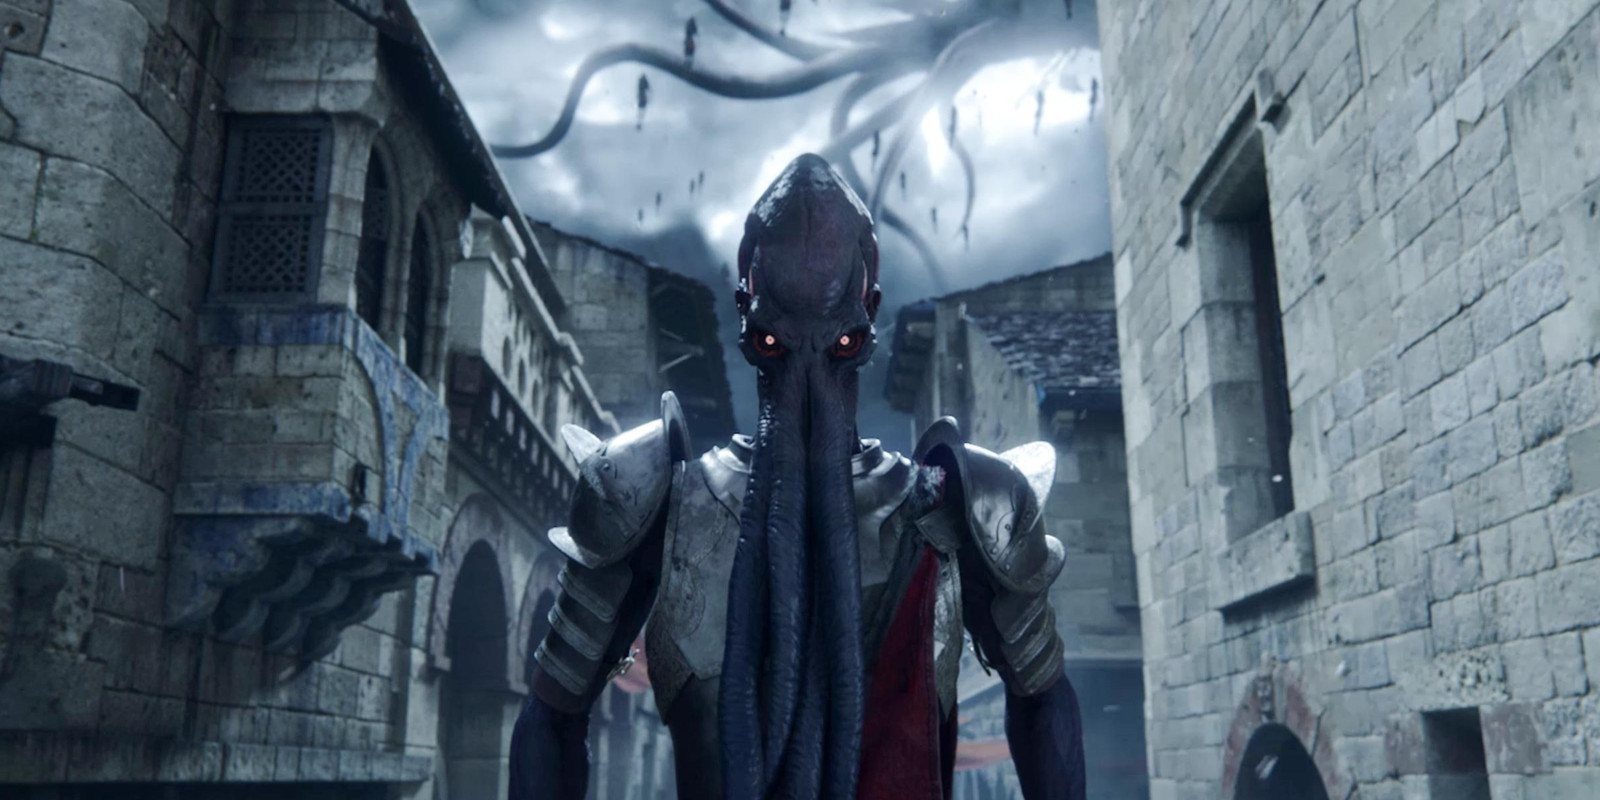 Larian Studios anuncia 'Baldur's Gate III' para PC y Stadia